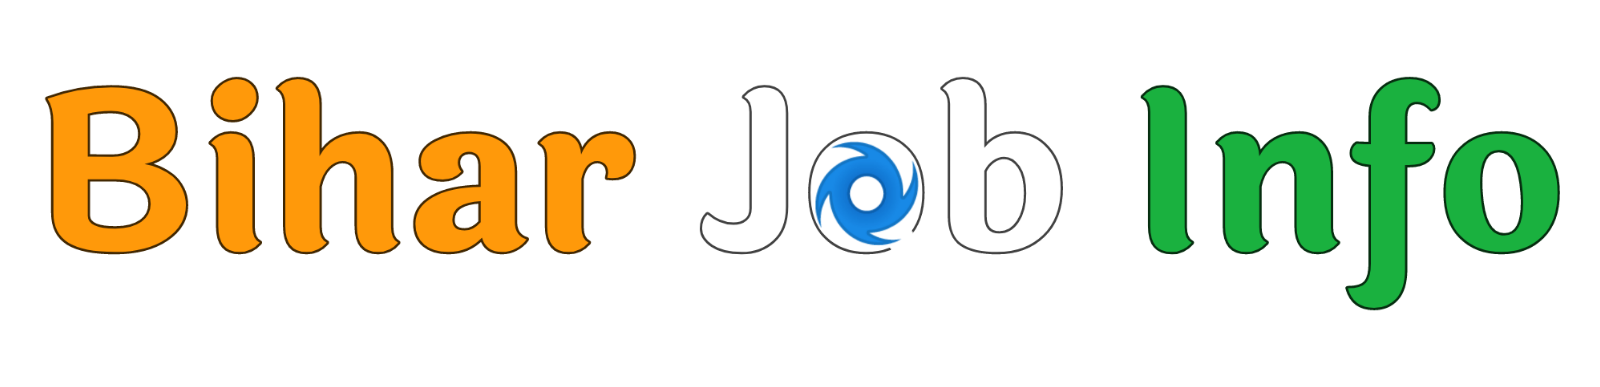 Bihar Job info | Bihar Job Portal Hindi